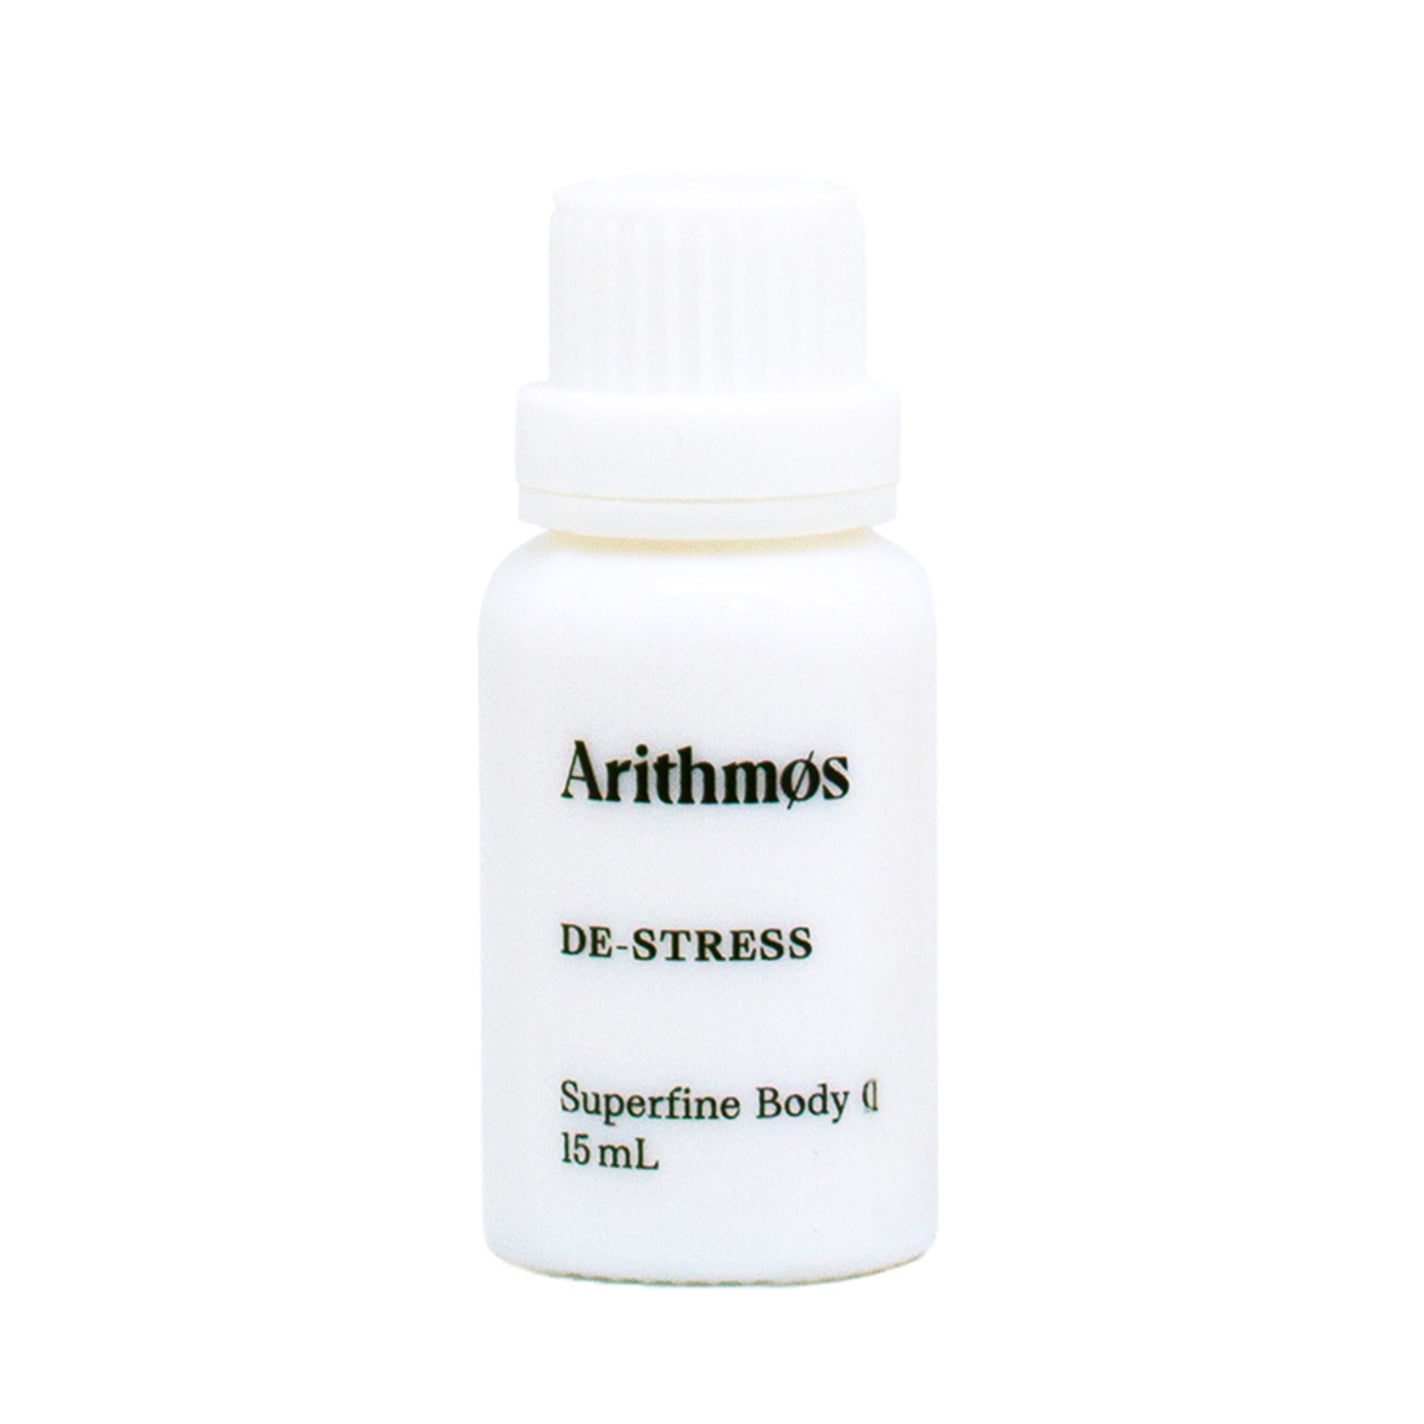 Arithmos De-Stress Superfine Body Oil - 15ml